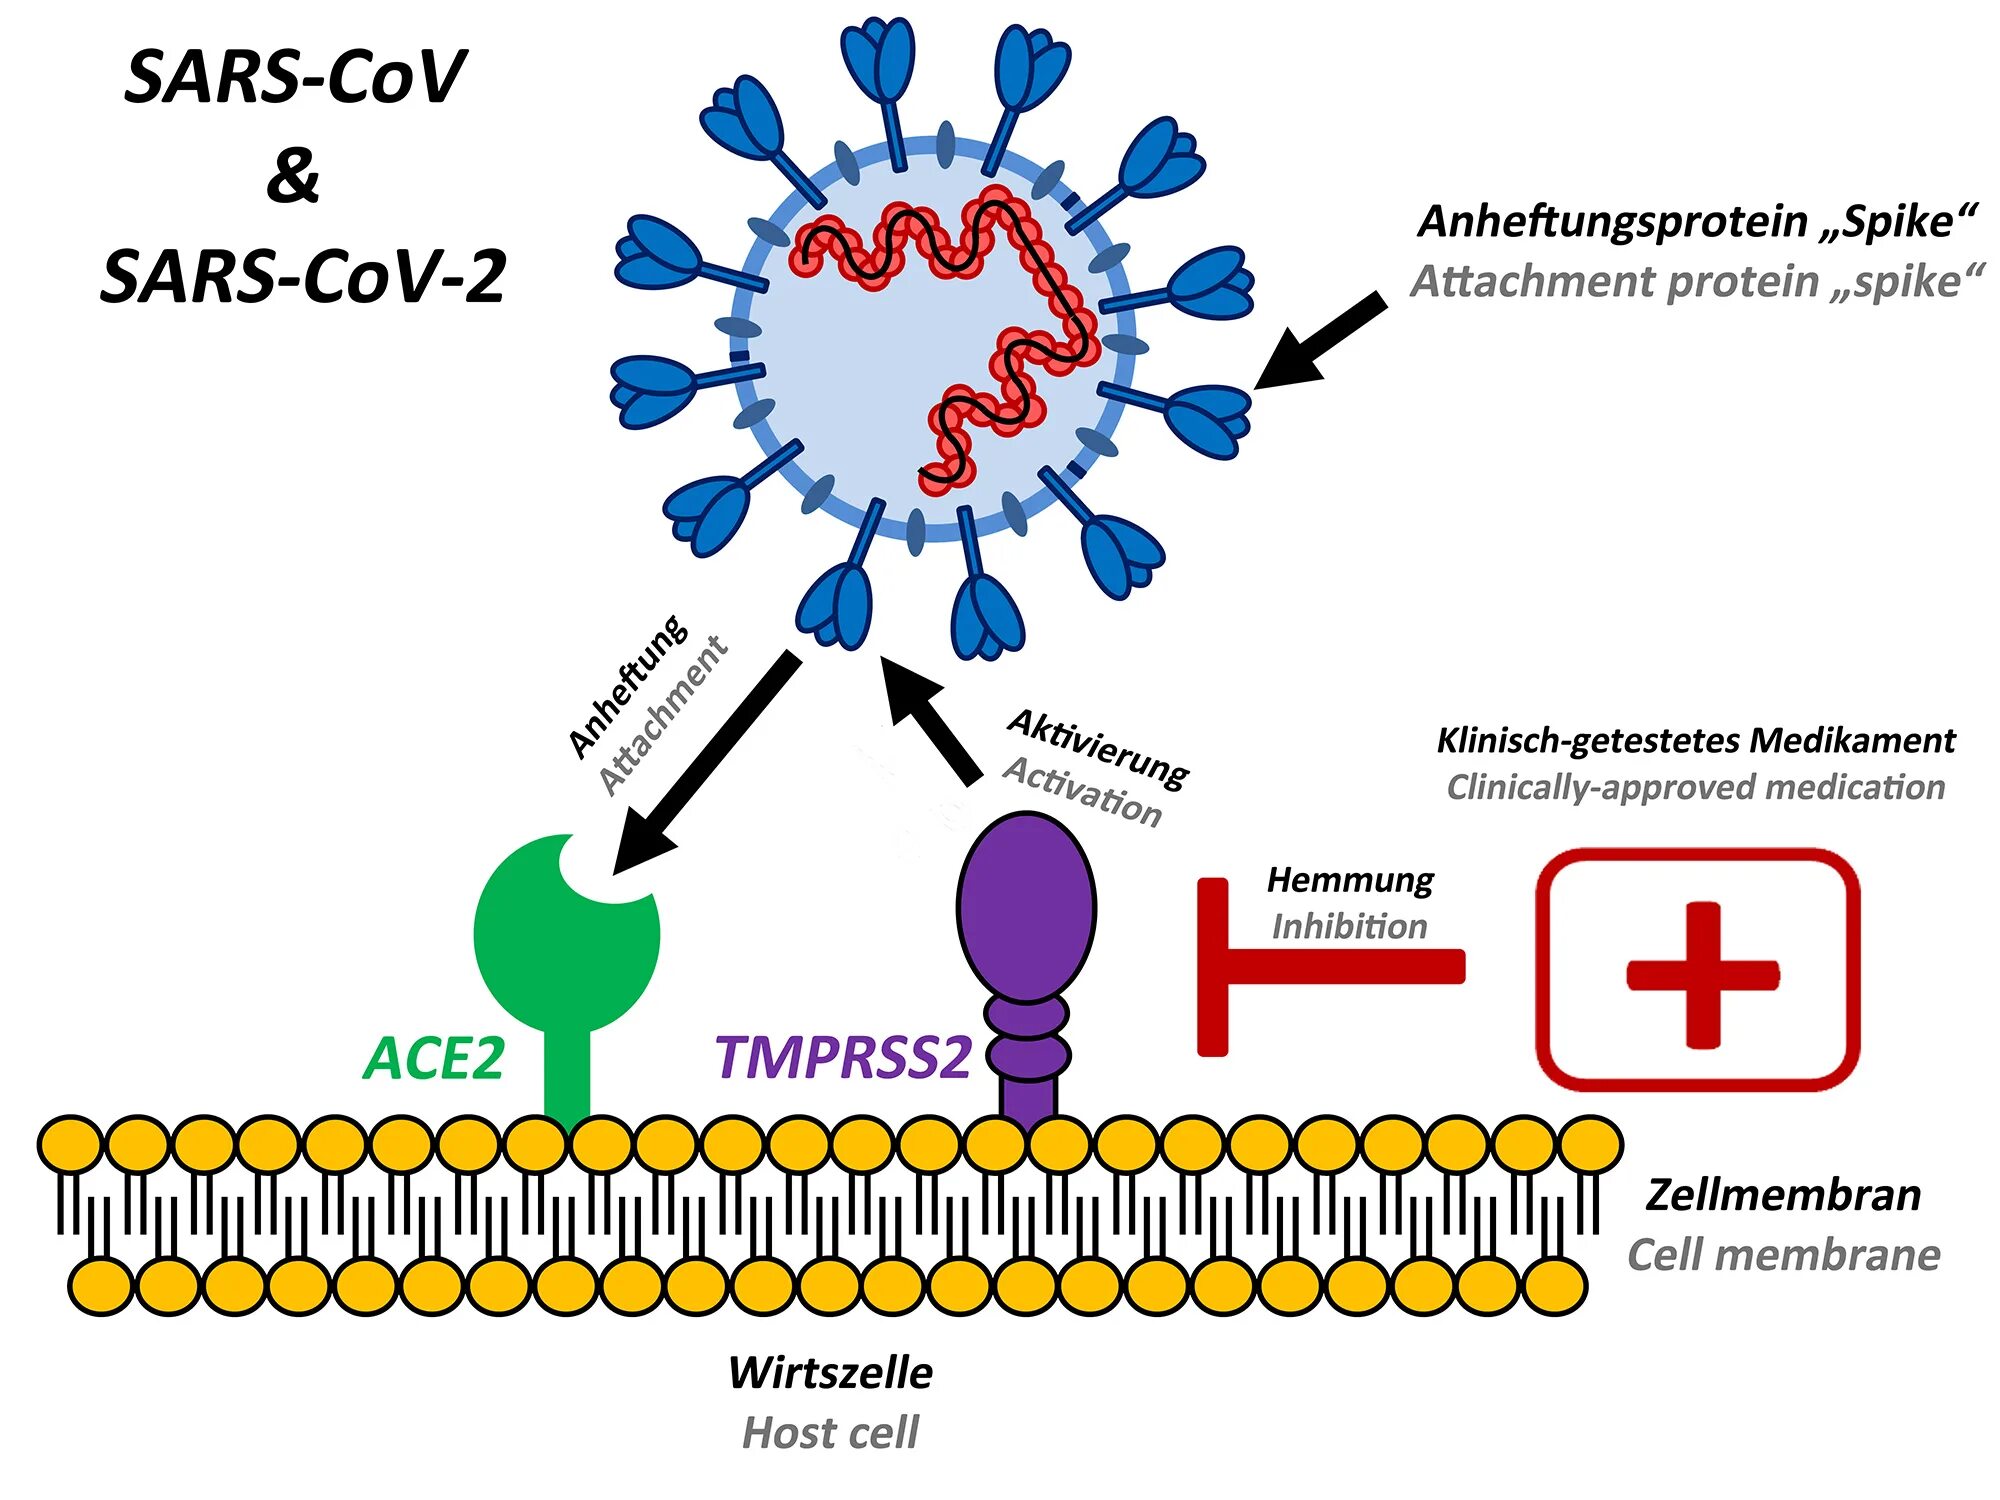 Ace 2 Рецептор коронавирус. Коронавирус строение Covid 19. Рецепторы клеток для SARS-cov-2. Строение вируса SARS-cov-2. Типа коронавируса в россии